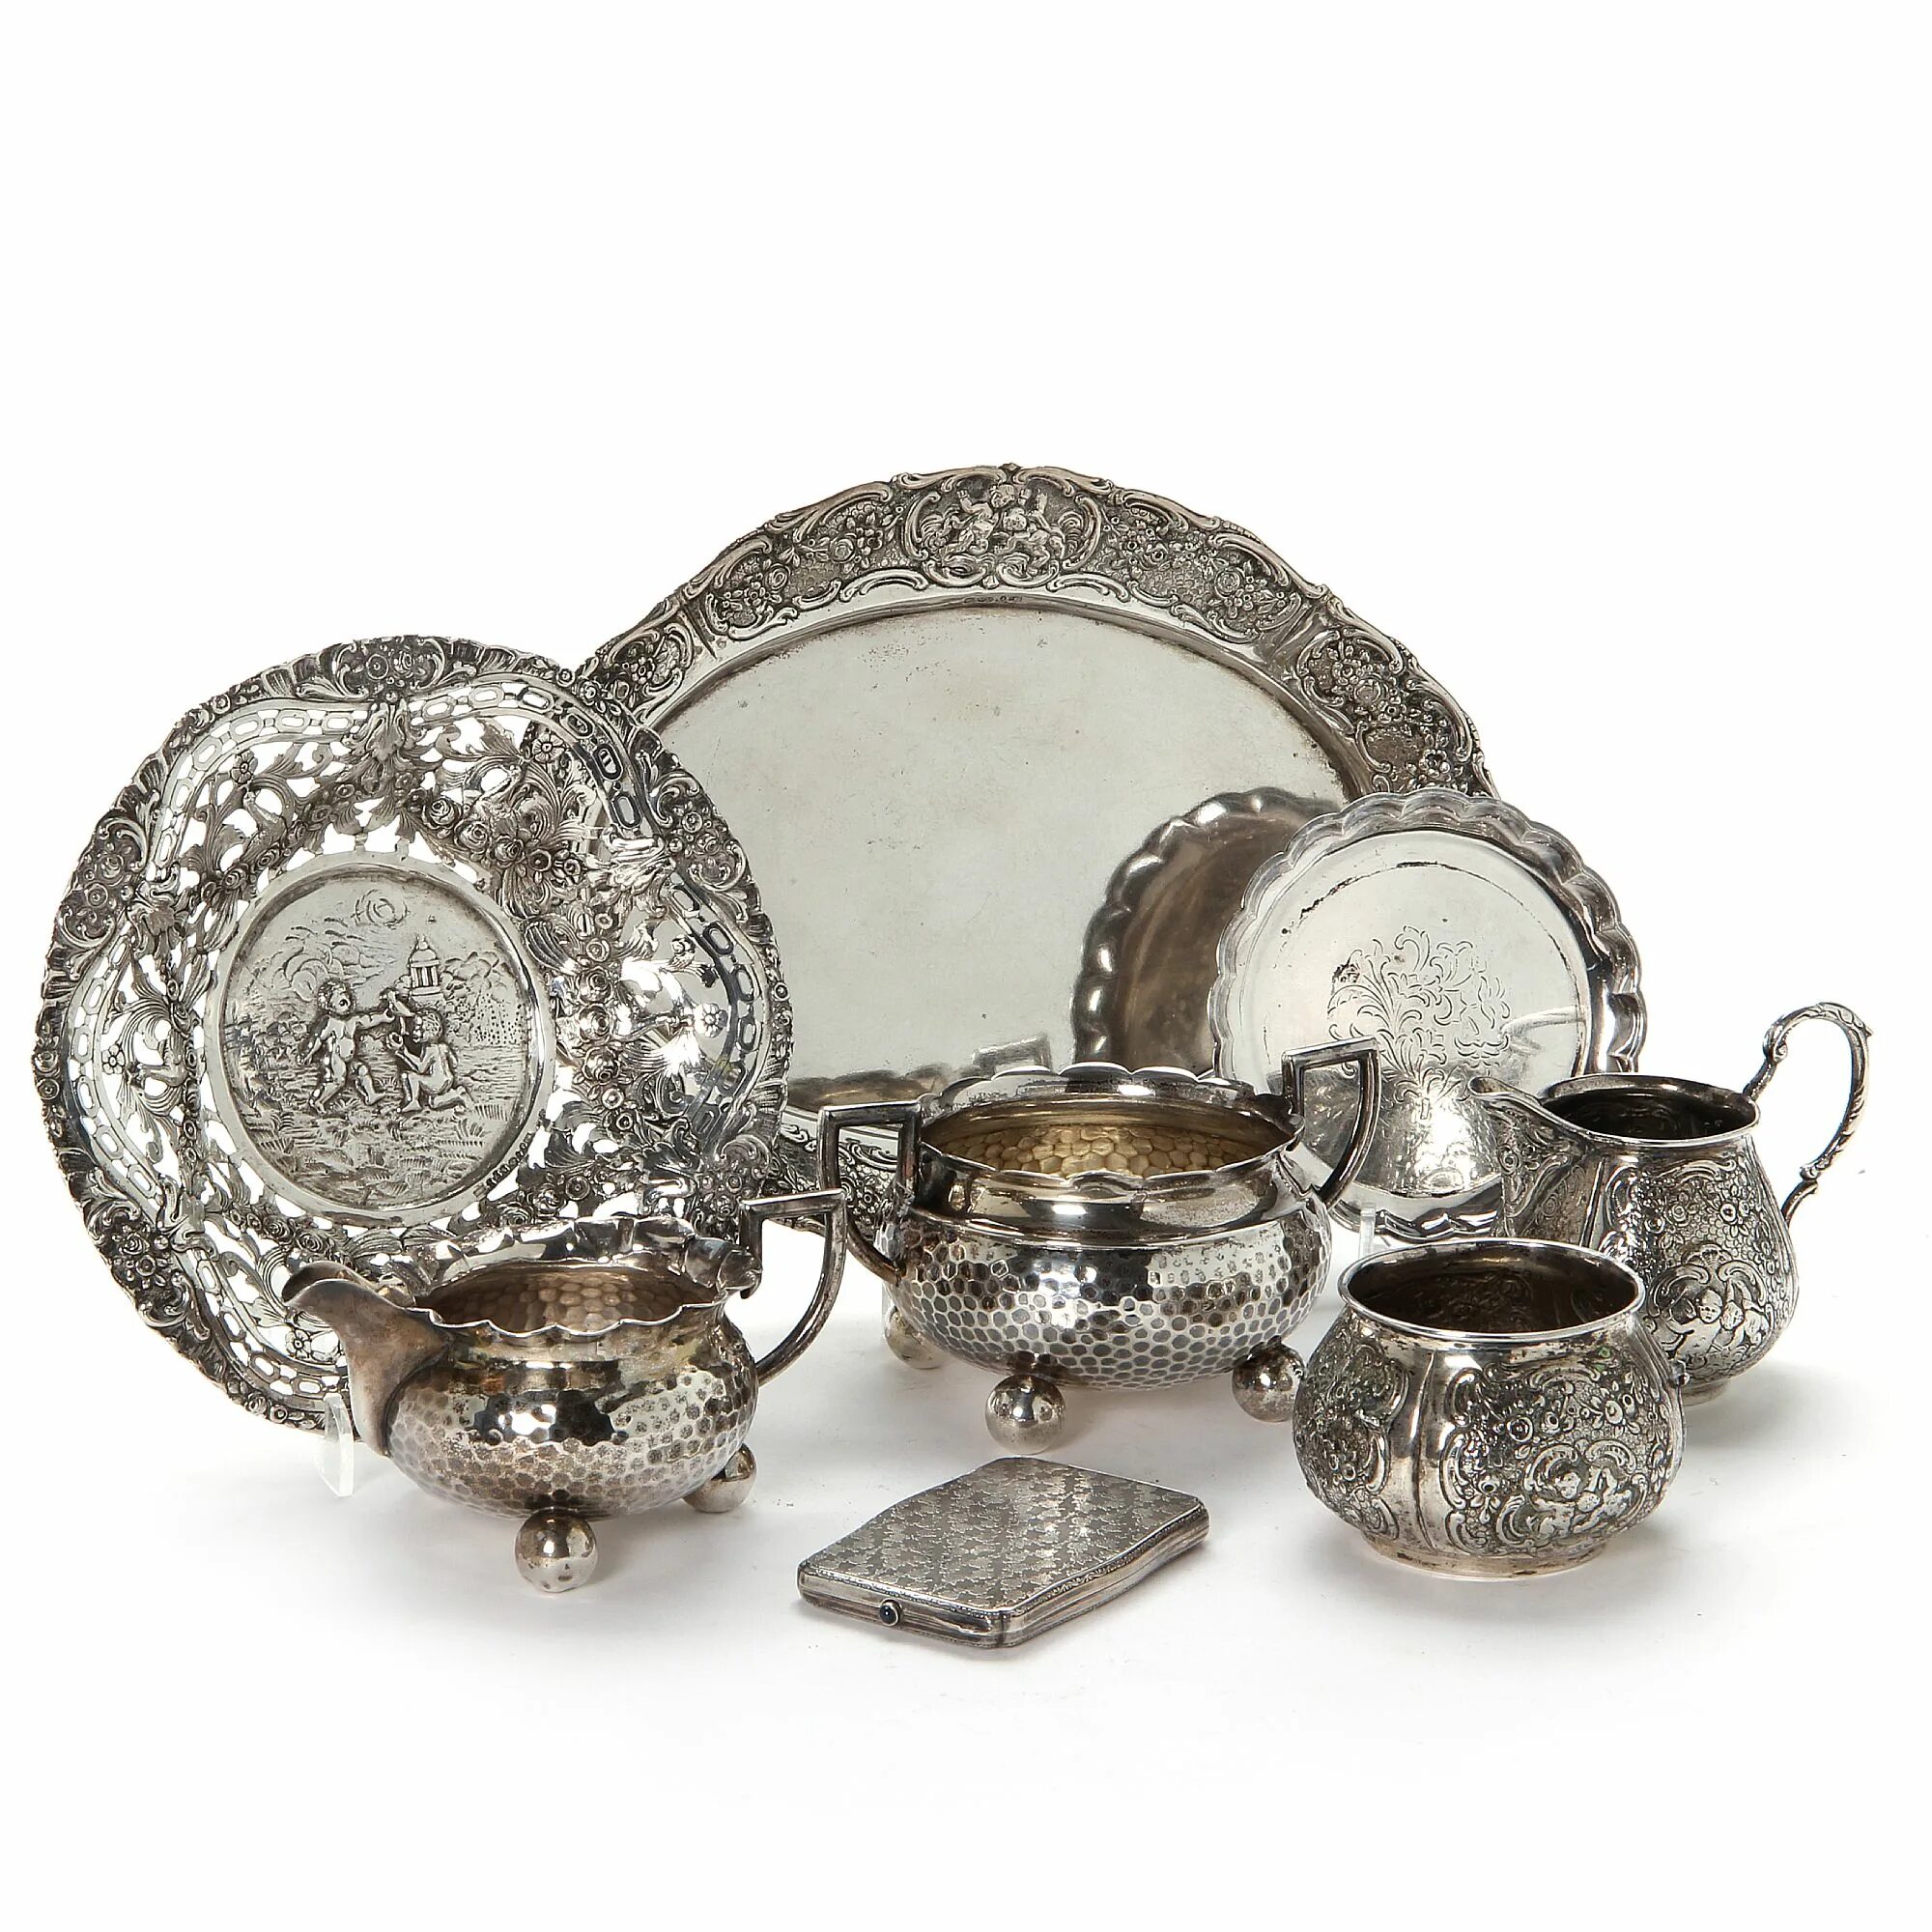 Столовое серебро. Lhiocchetti Lucca 1896 посуда серебро. Falstaff посуда Silver Plated. Барон посуда серебро 1810. Старая серебряная посуда.